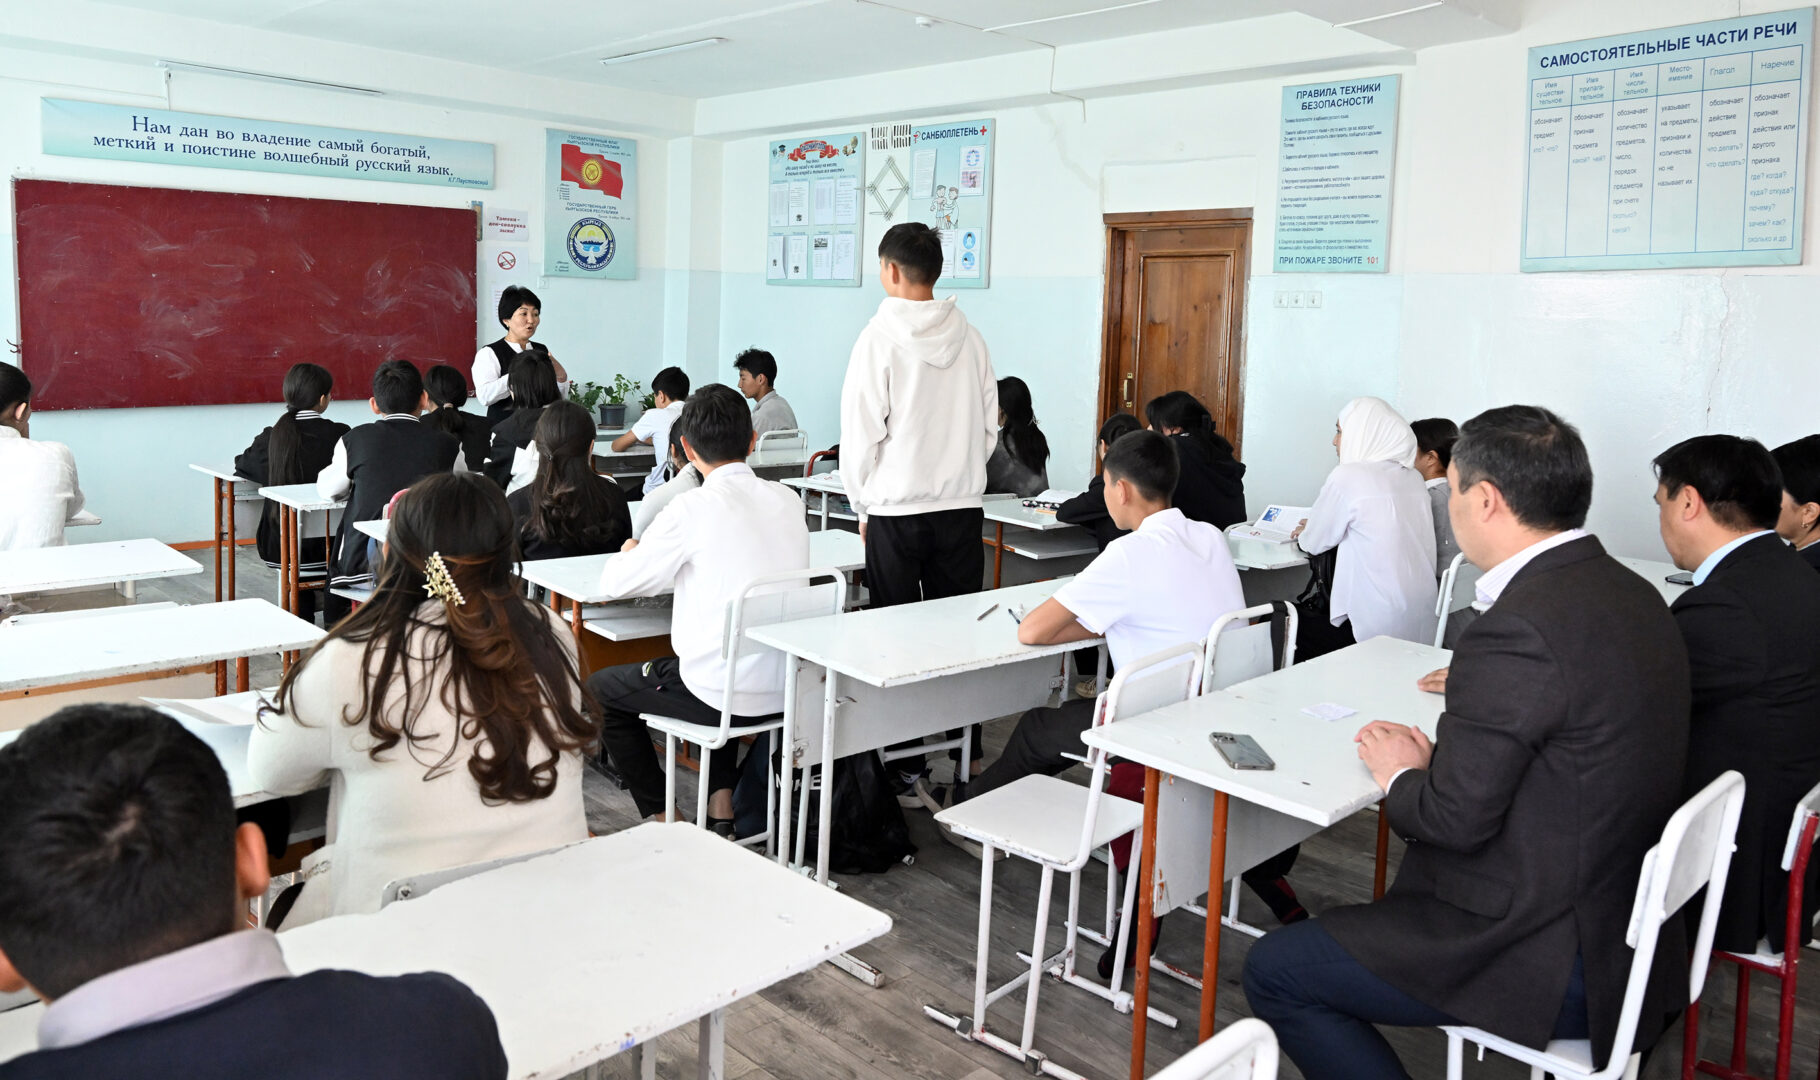 DOS 3784 Президент внепланово посетил одну из школ Бишкека и посидел на уроке - фото